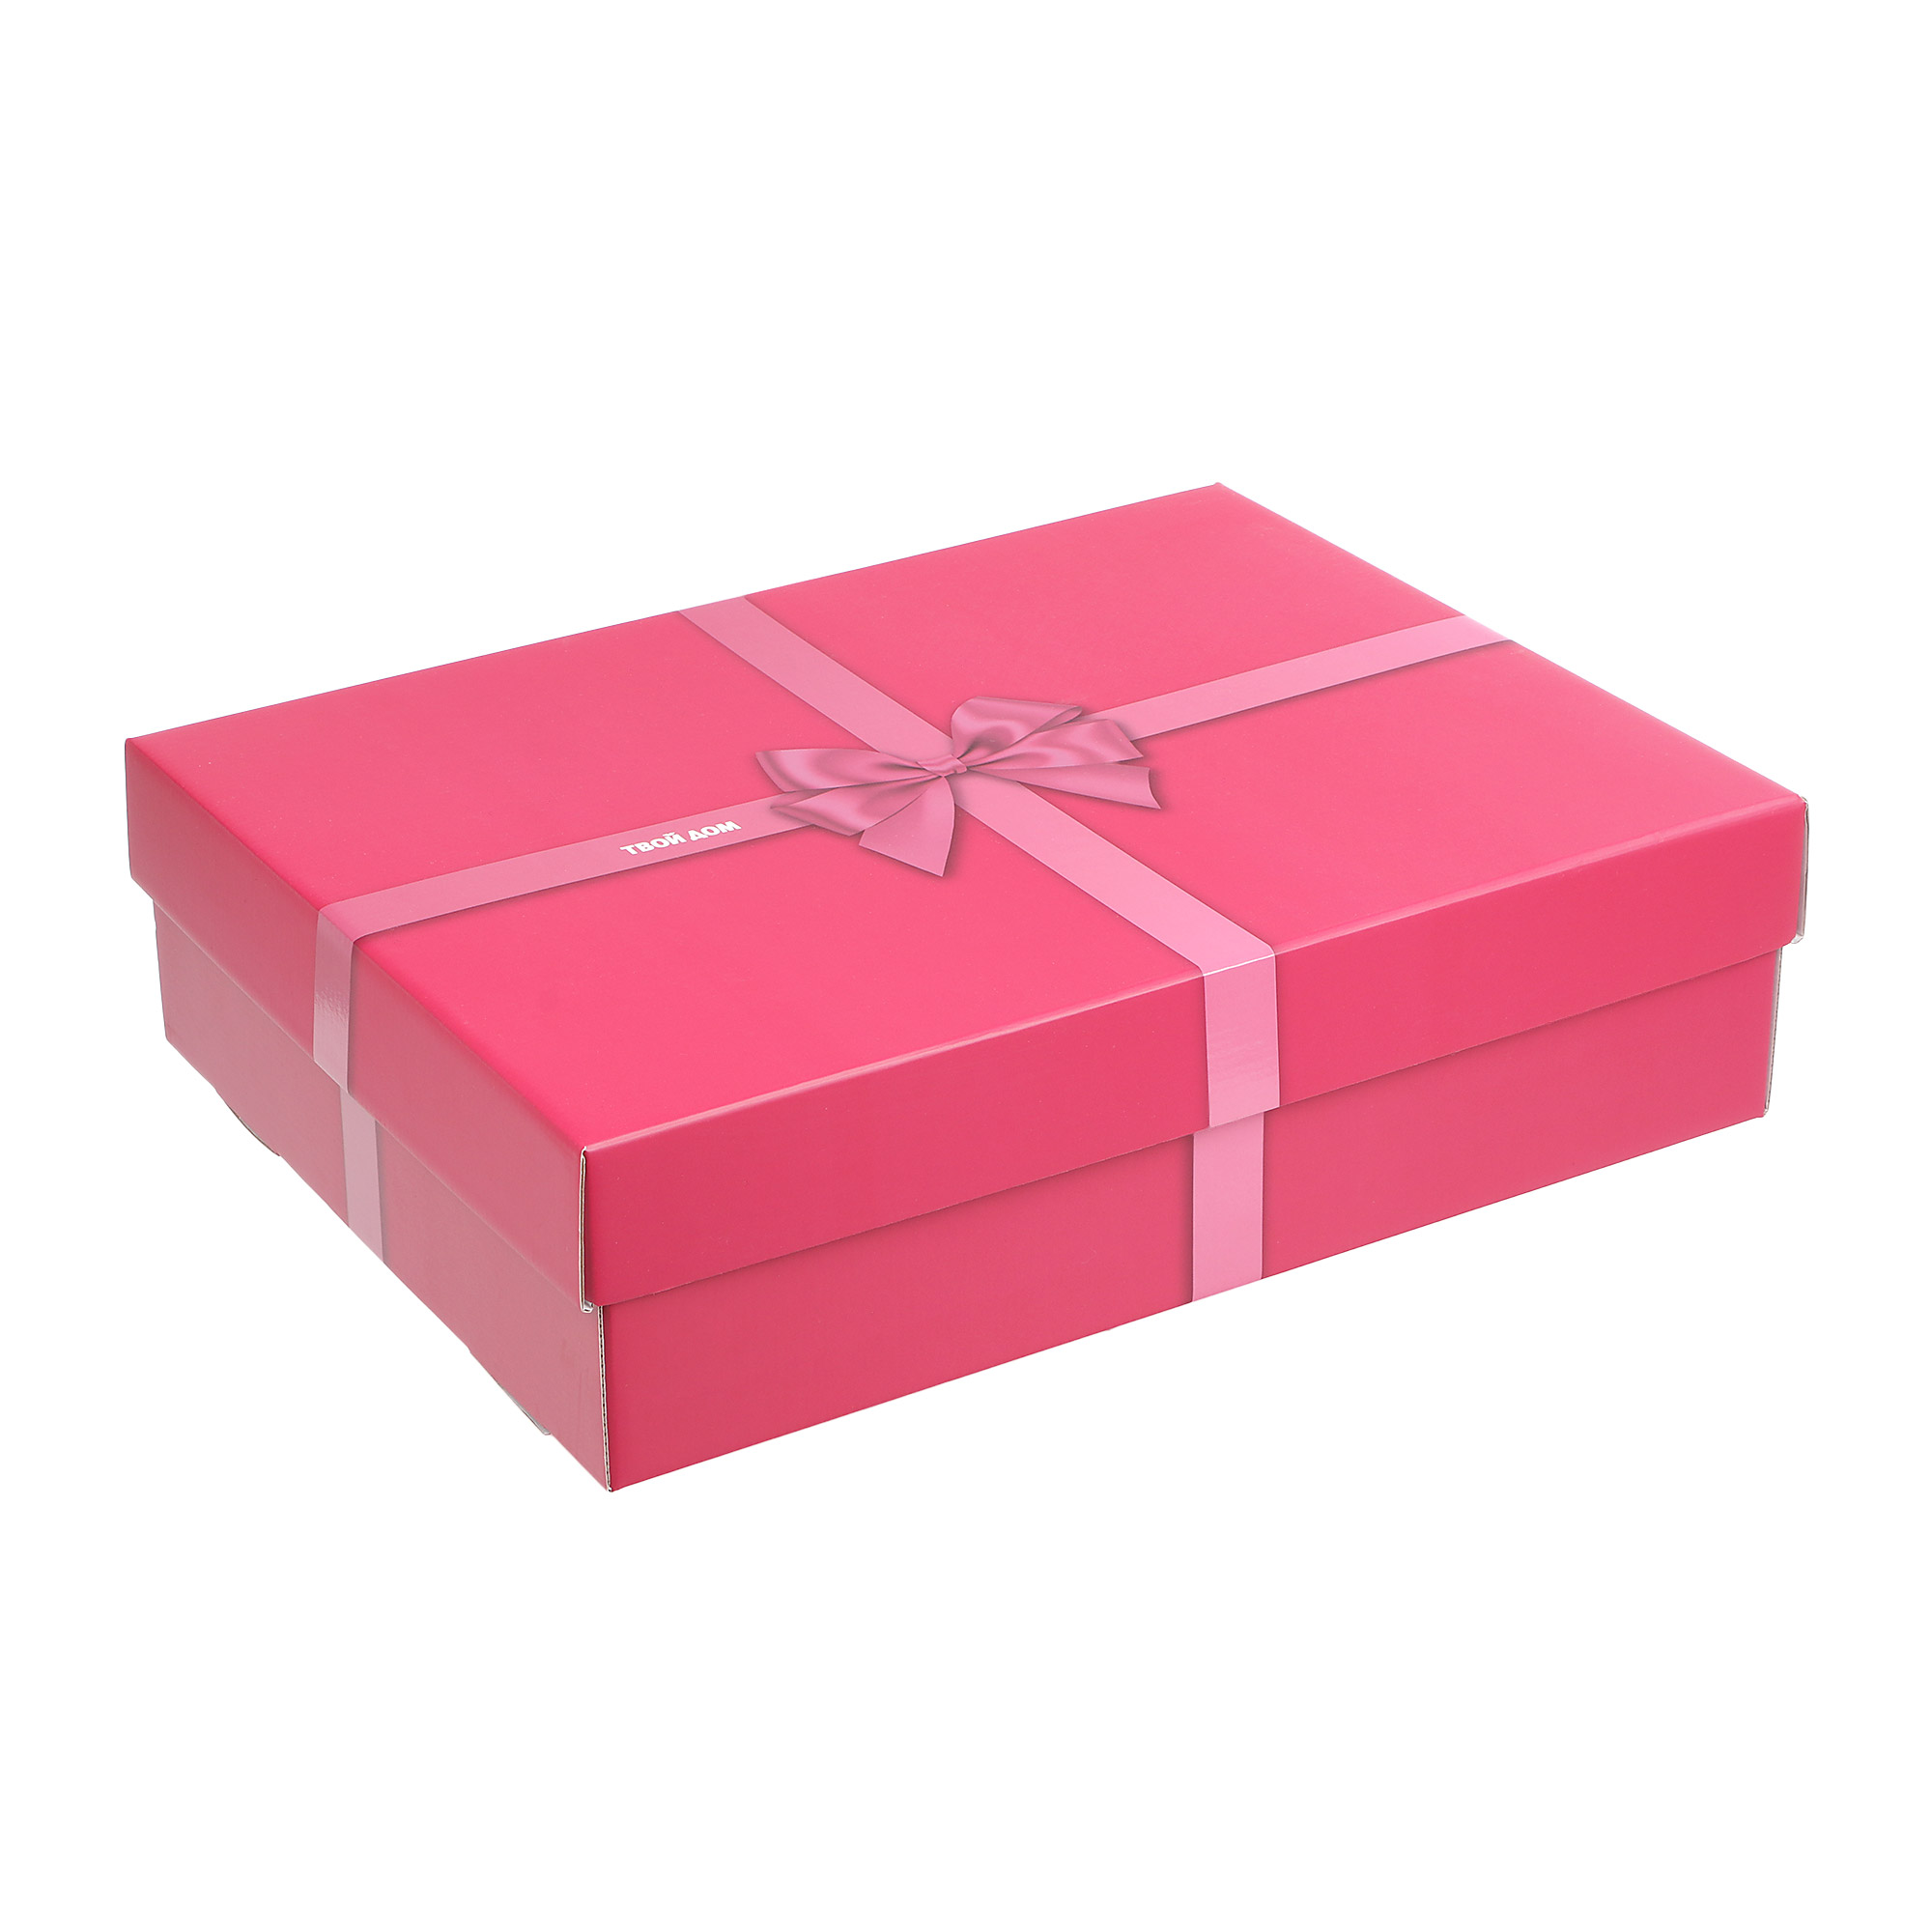 фото Коробка подарочная твой дом розовая 45x35x12